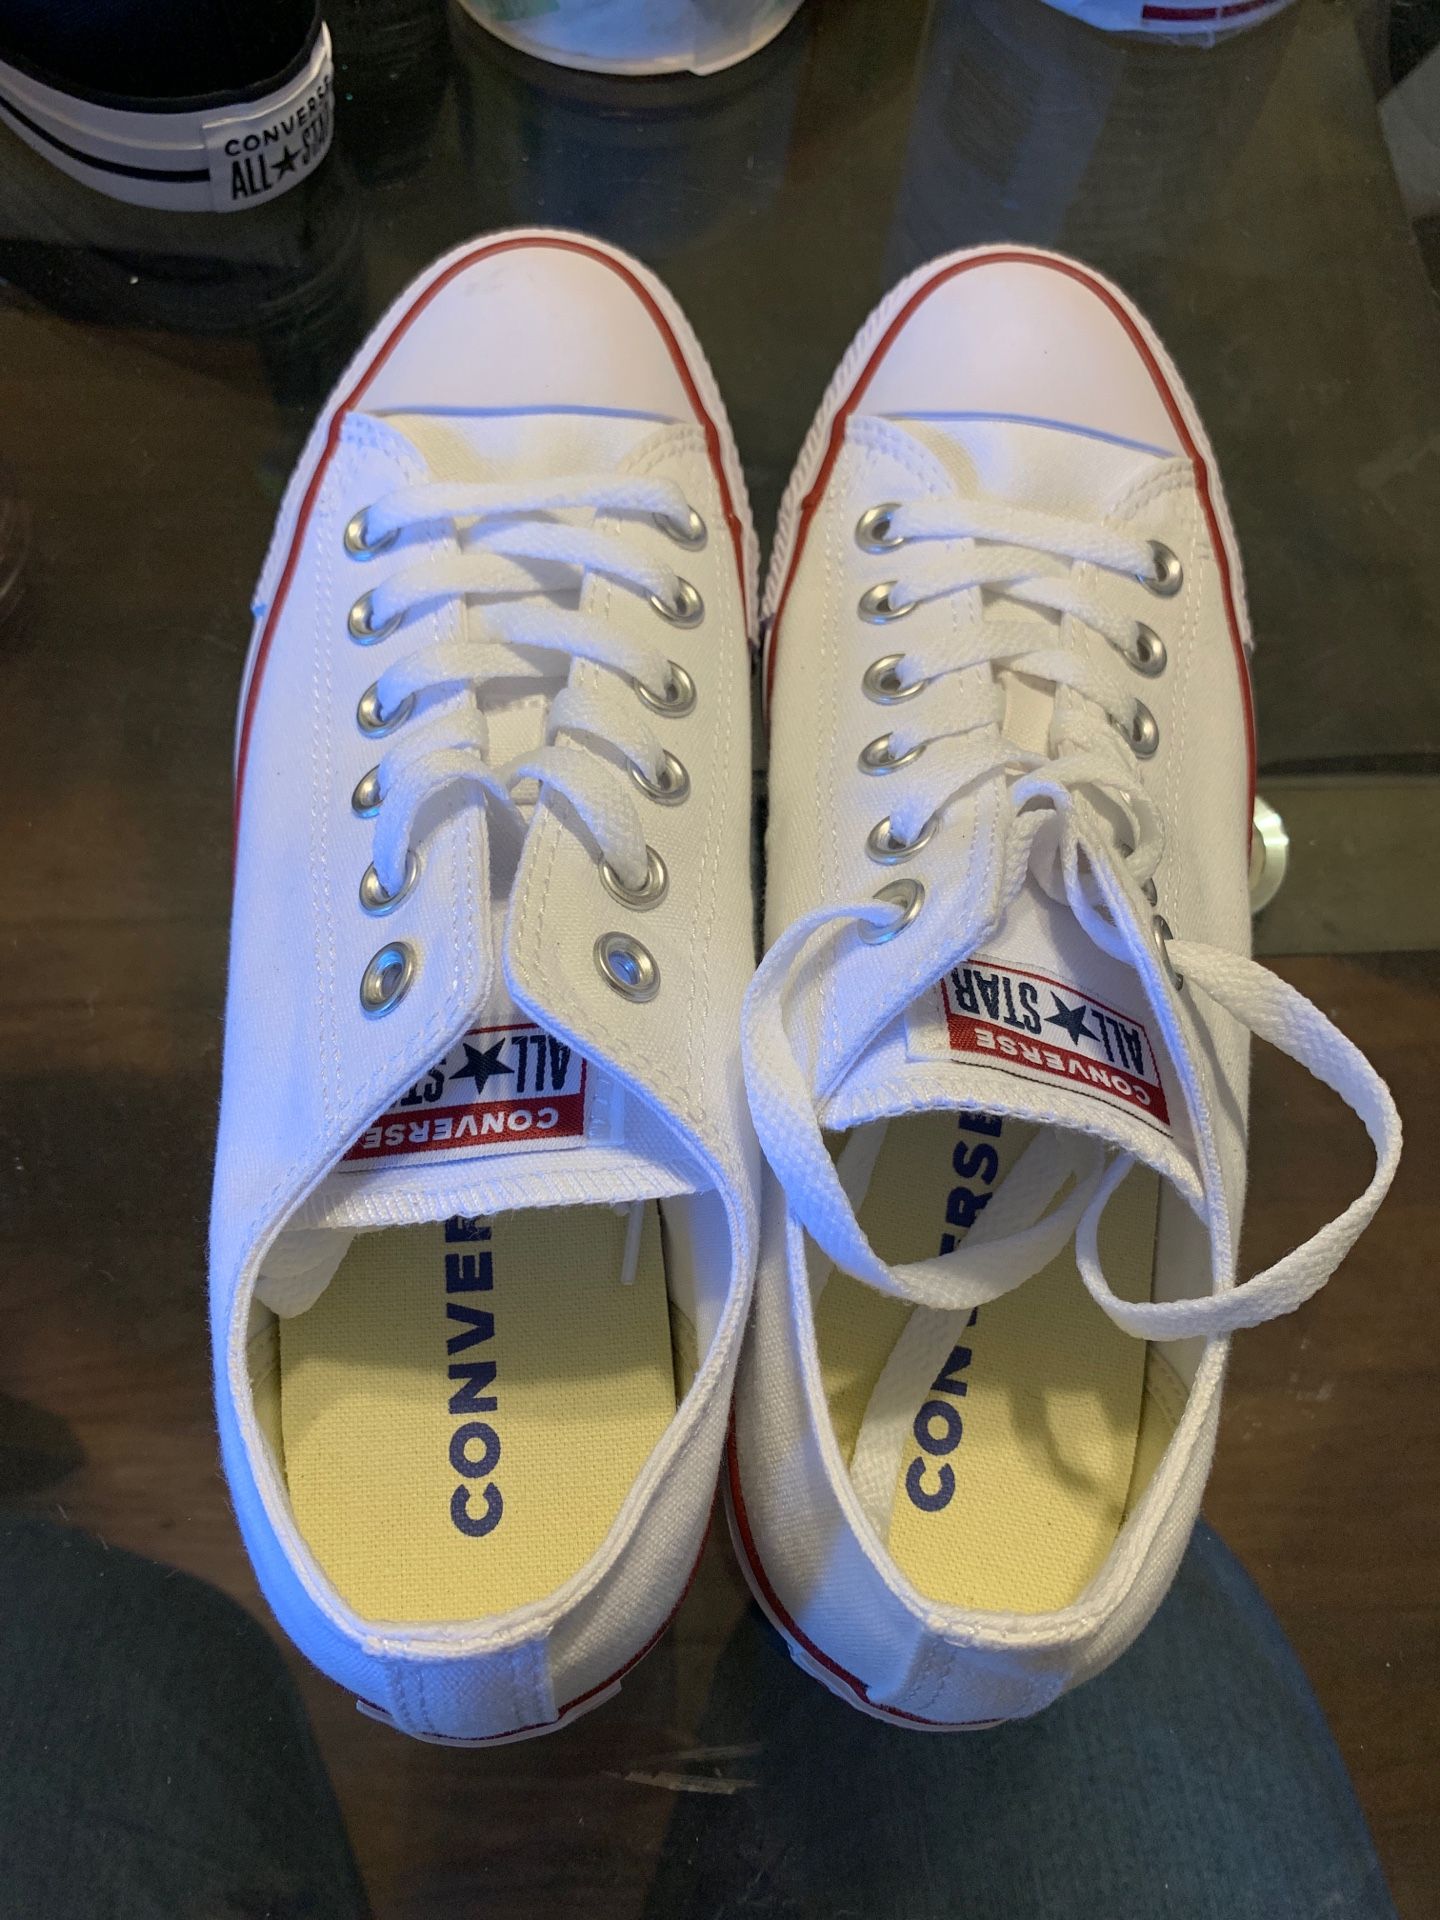 Brand new converse